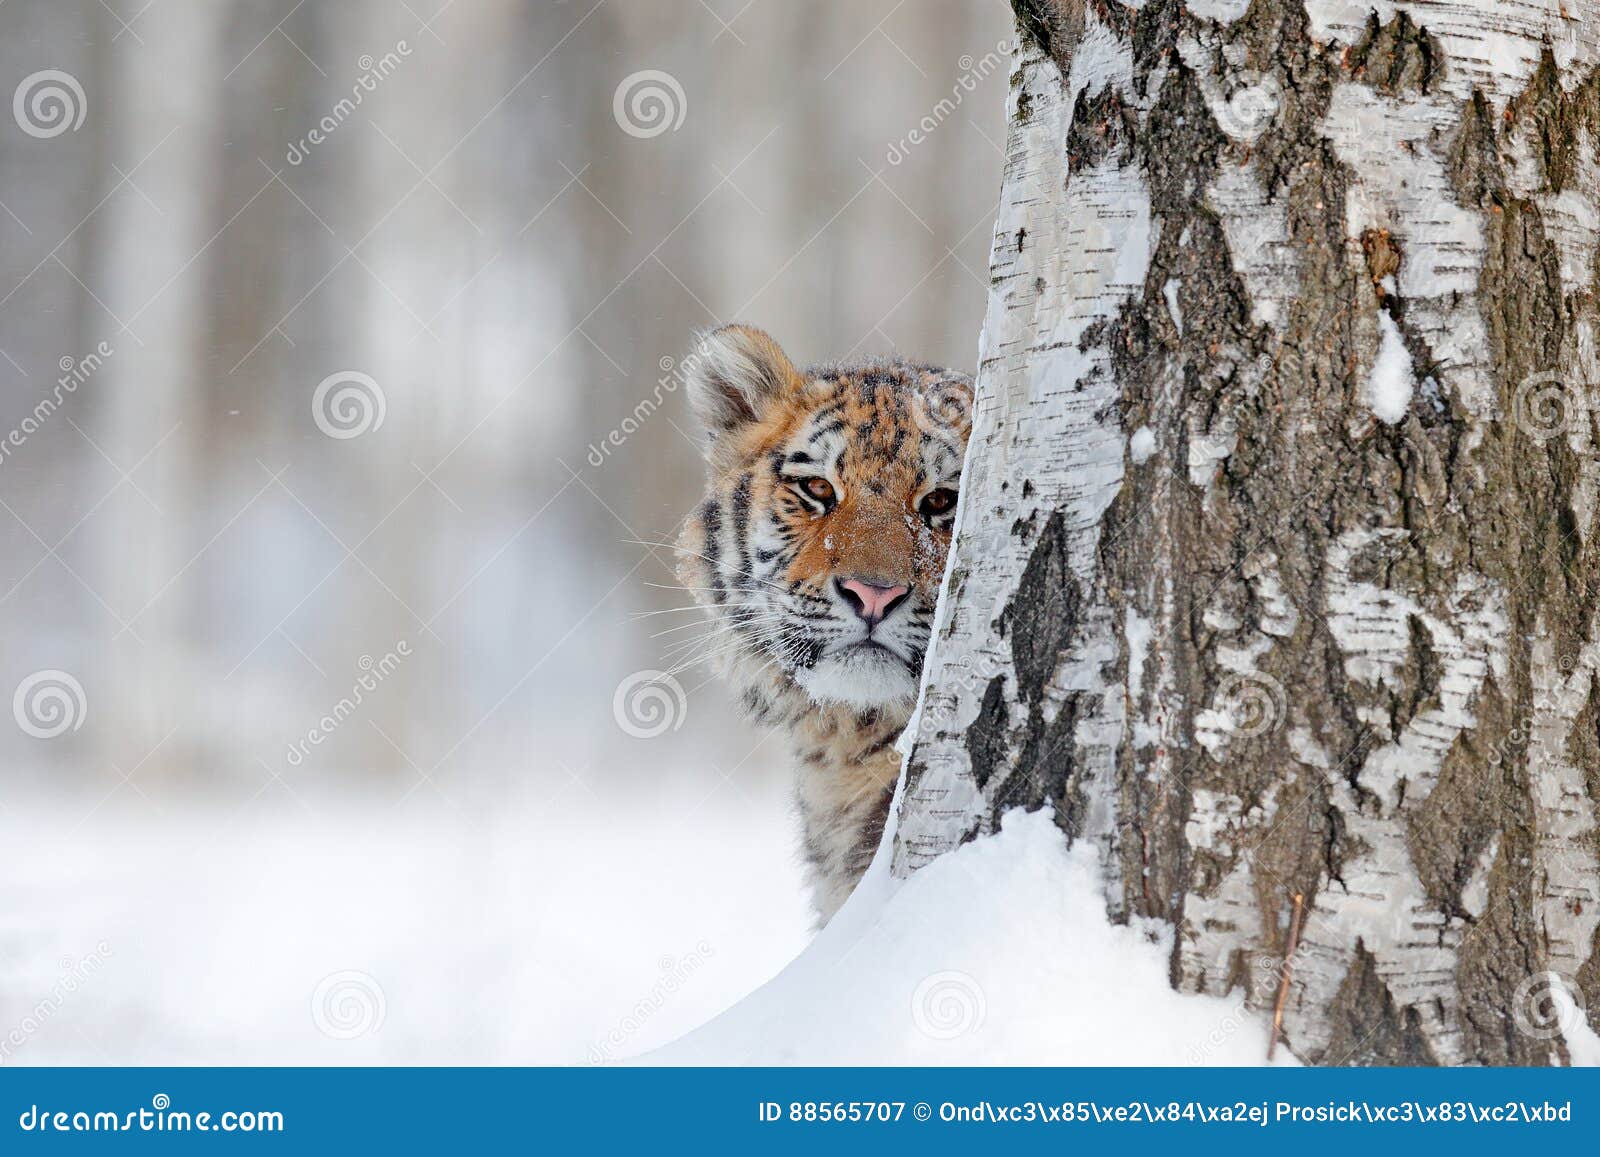 hidden face portrait of tigre. tiger in wild winter nature. amur tiger running in the snow. action wildlife scene, danger animal.